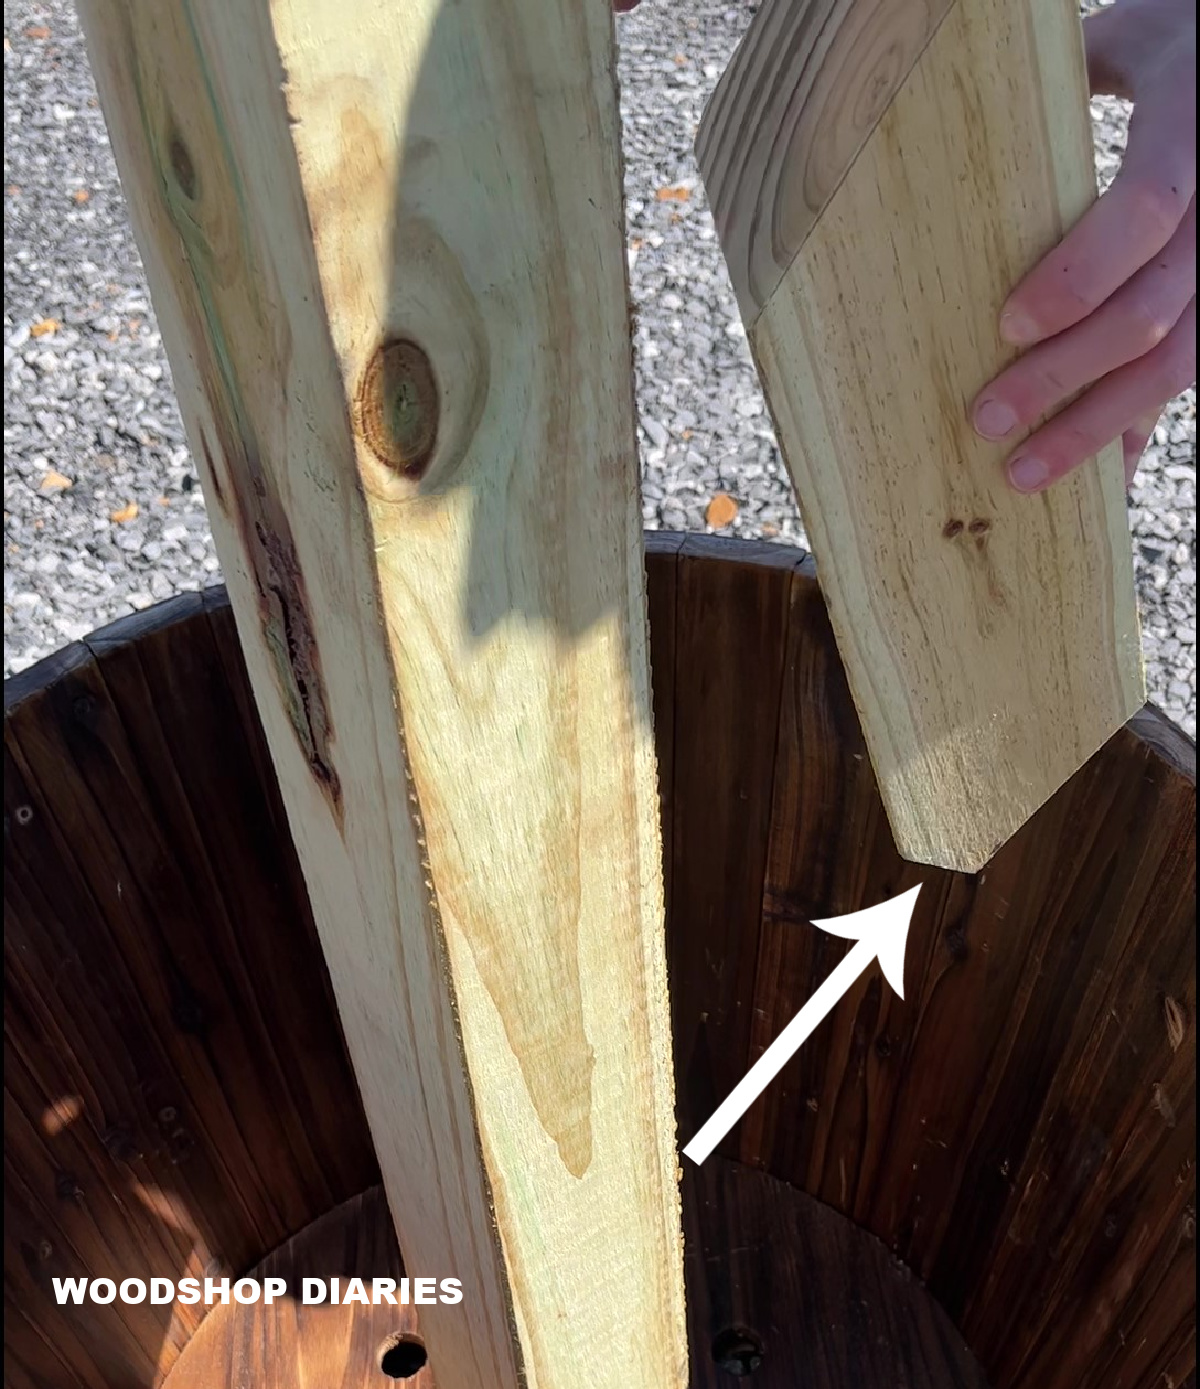 Placing corner supports posts into barrel